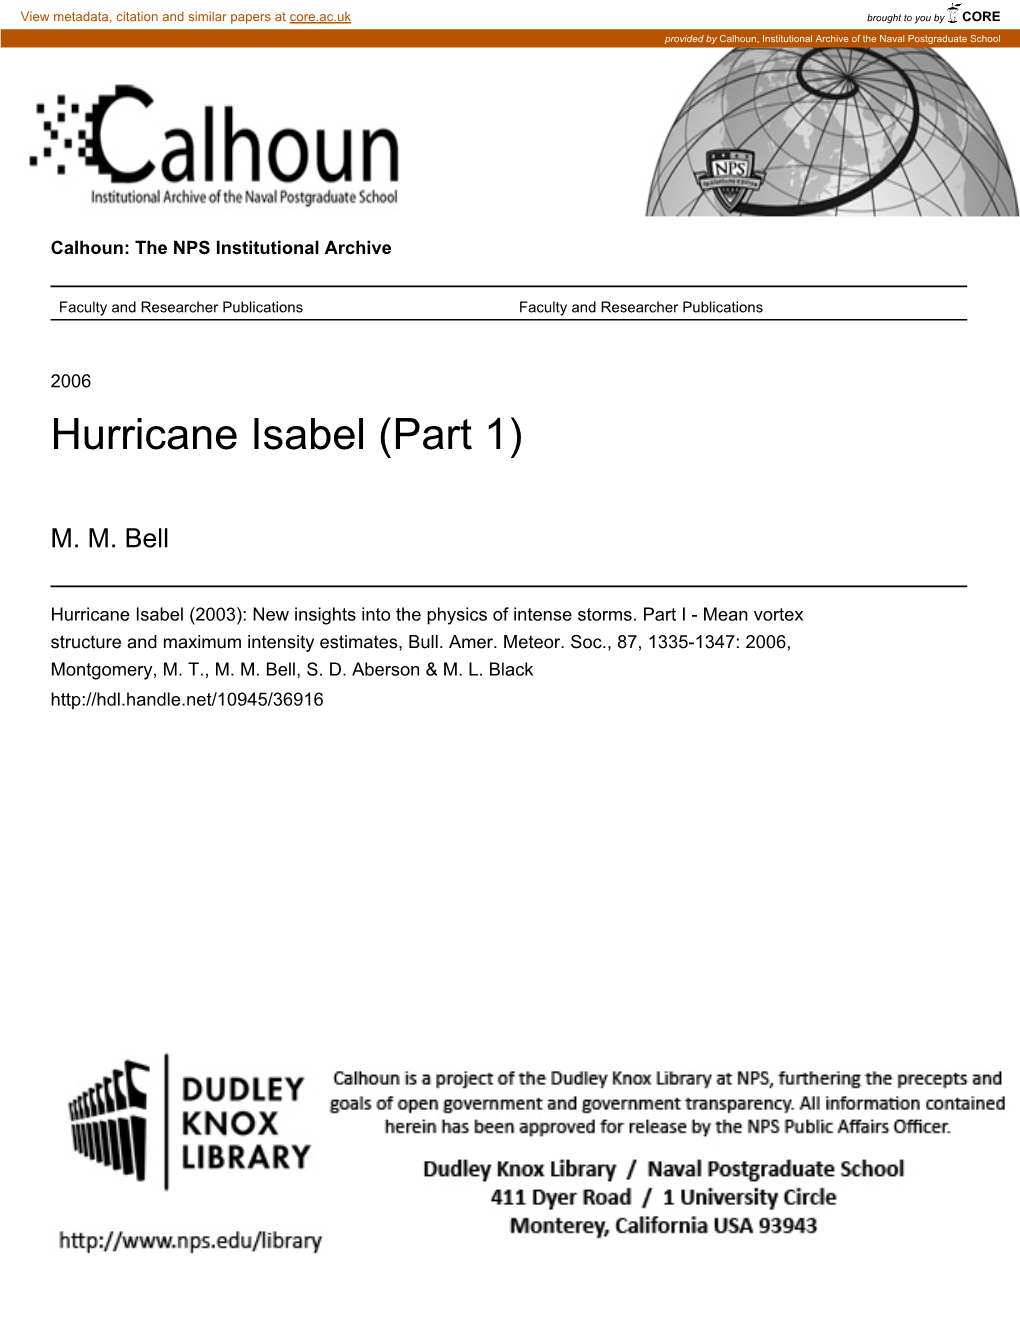 Hurricane Isabel (Part 1)